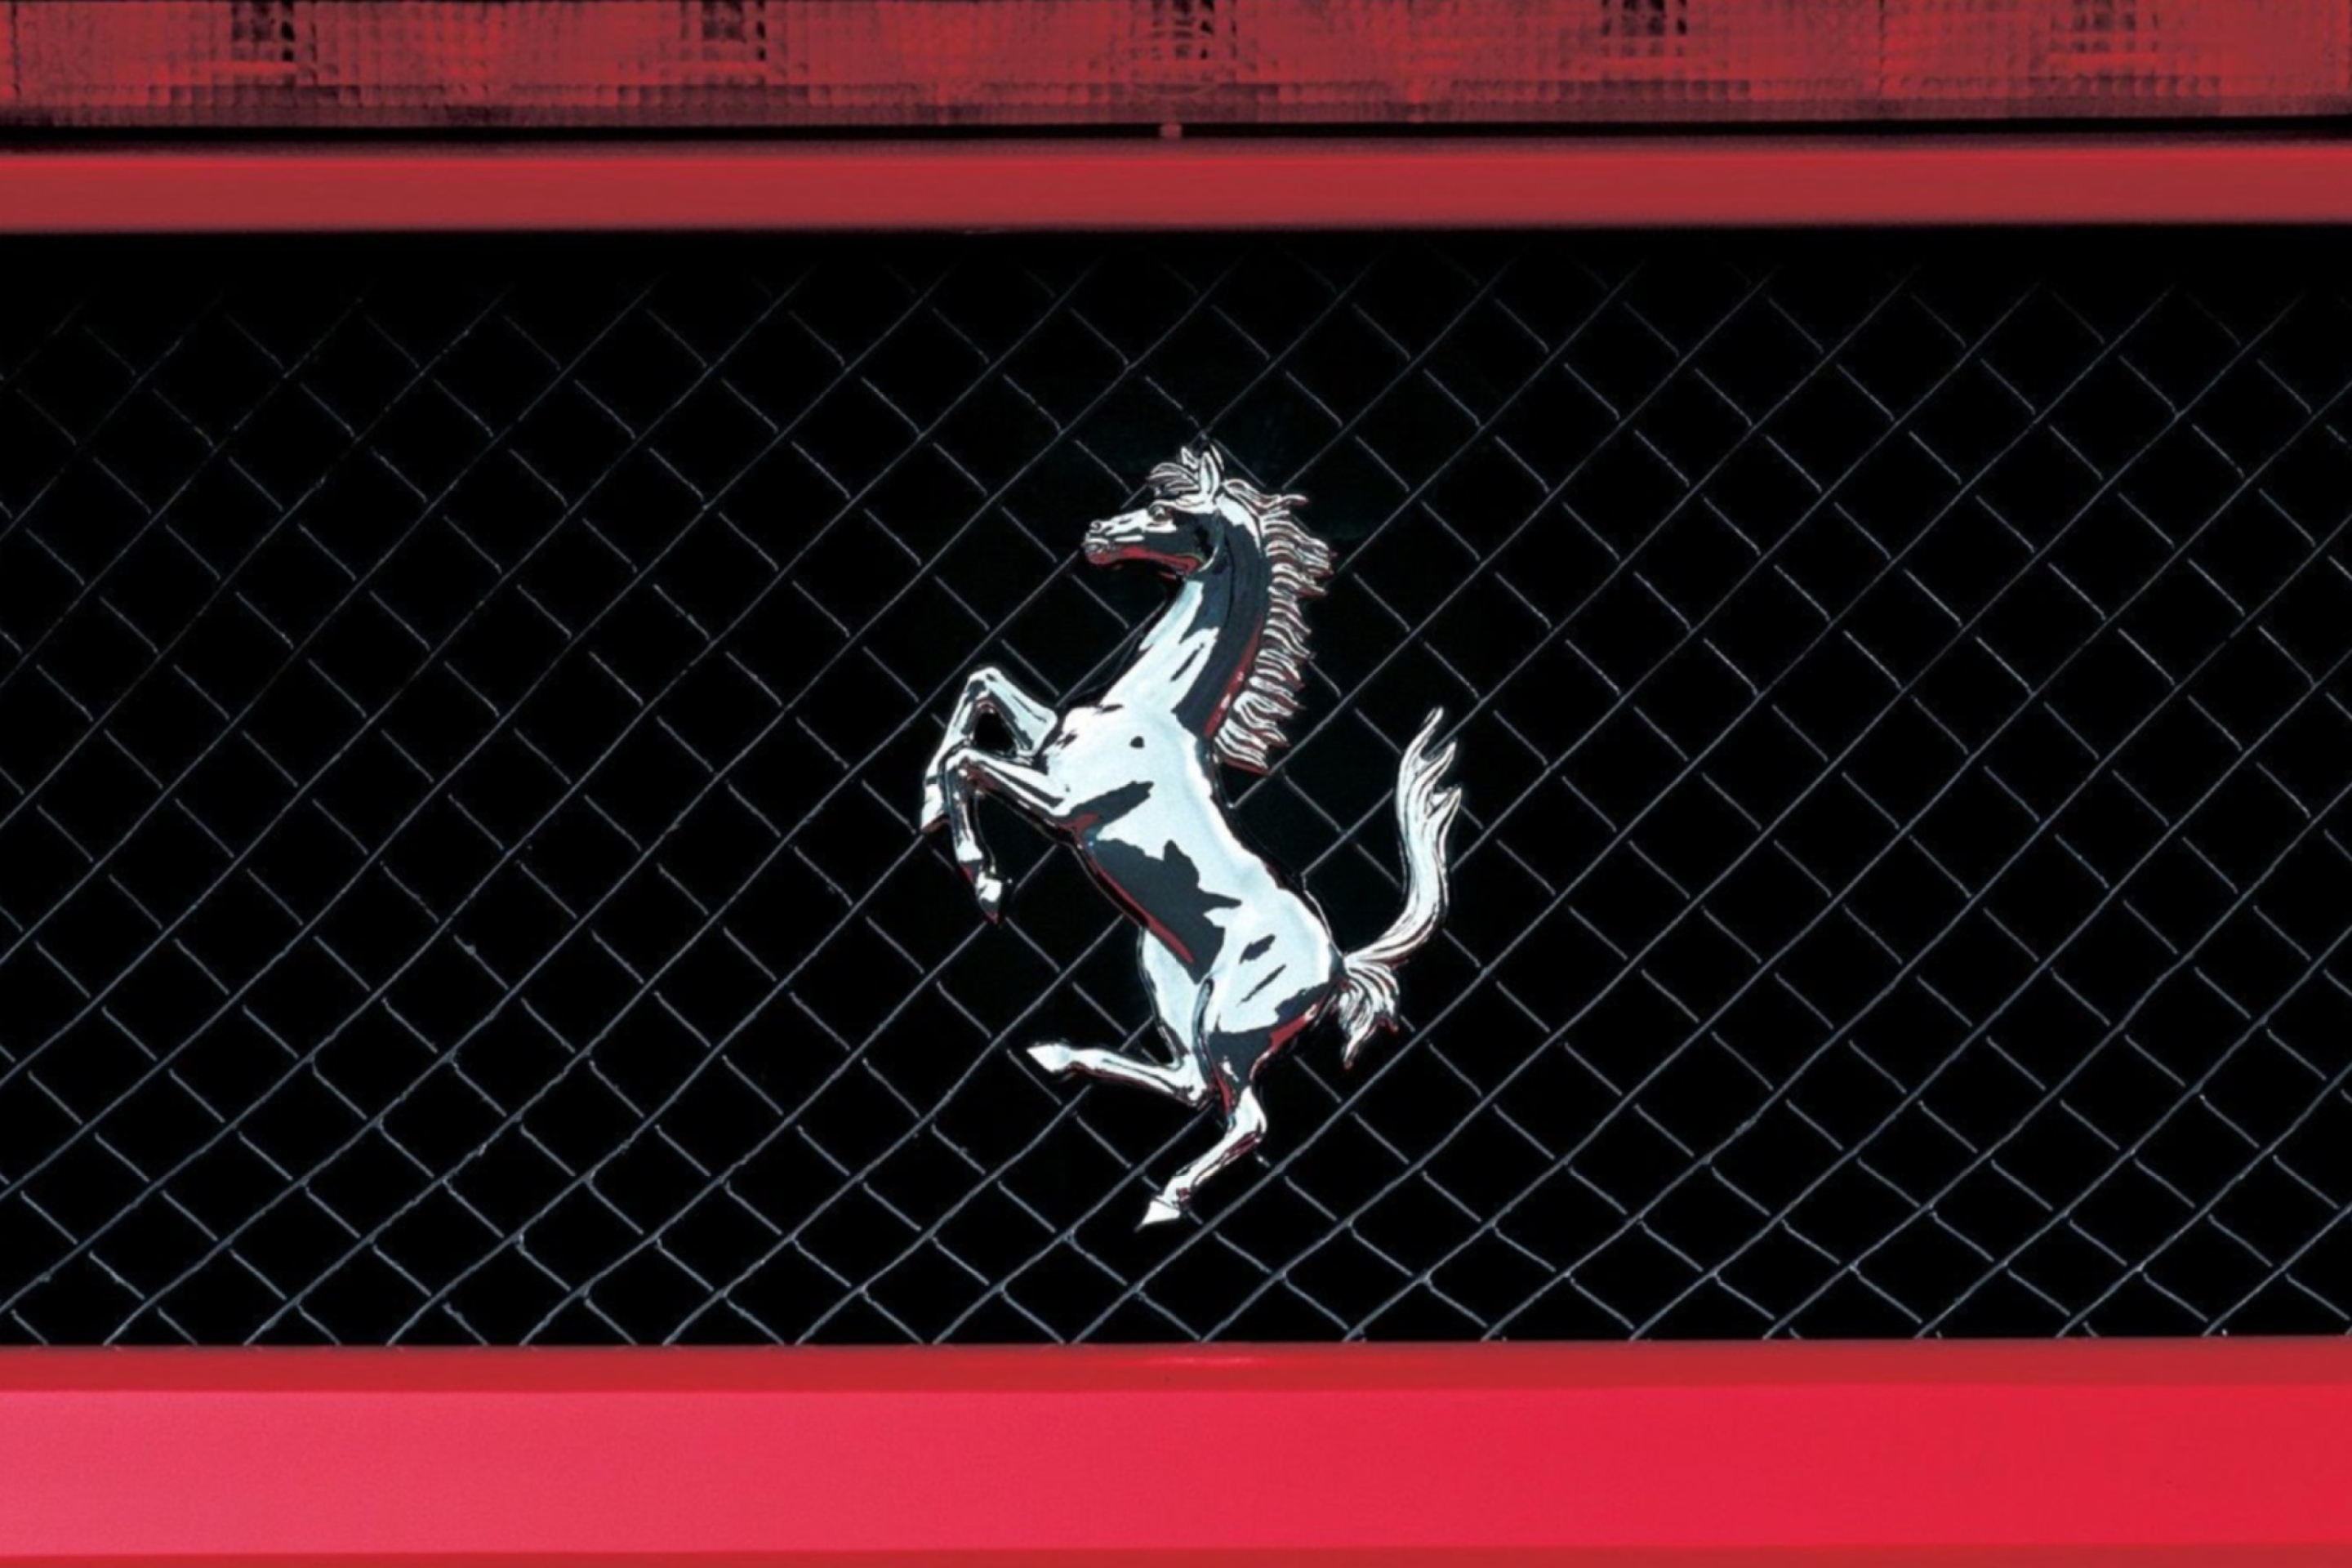 Ferrari Logo wallpaper 2880x1920